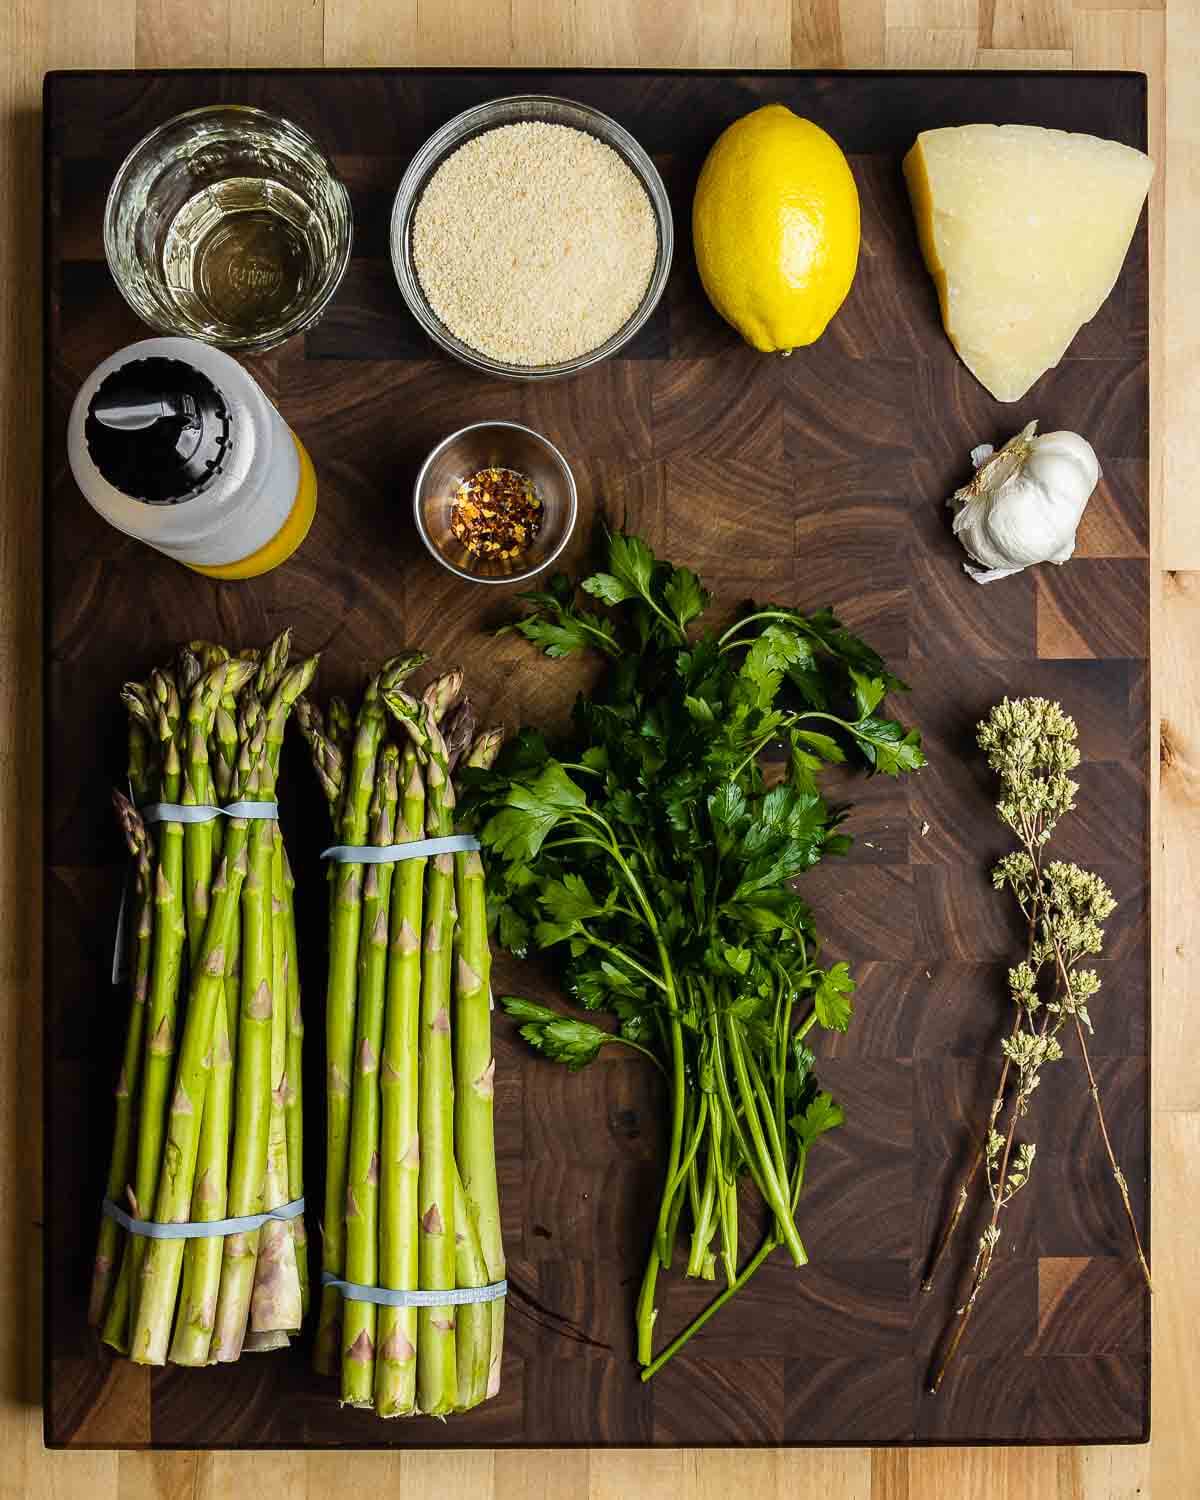 Ingredients shown: white wine, breadcrumbs, lemon, Pecorino, olive oil, hot red pepper flakes, garlic, asparagus, parsley, and Sicilian oregano.